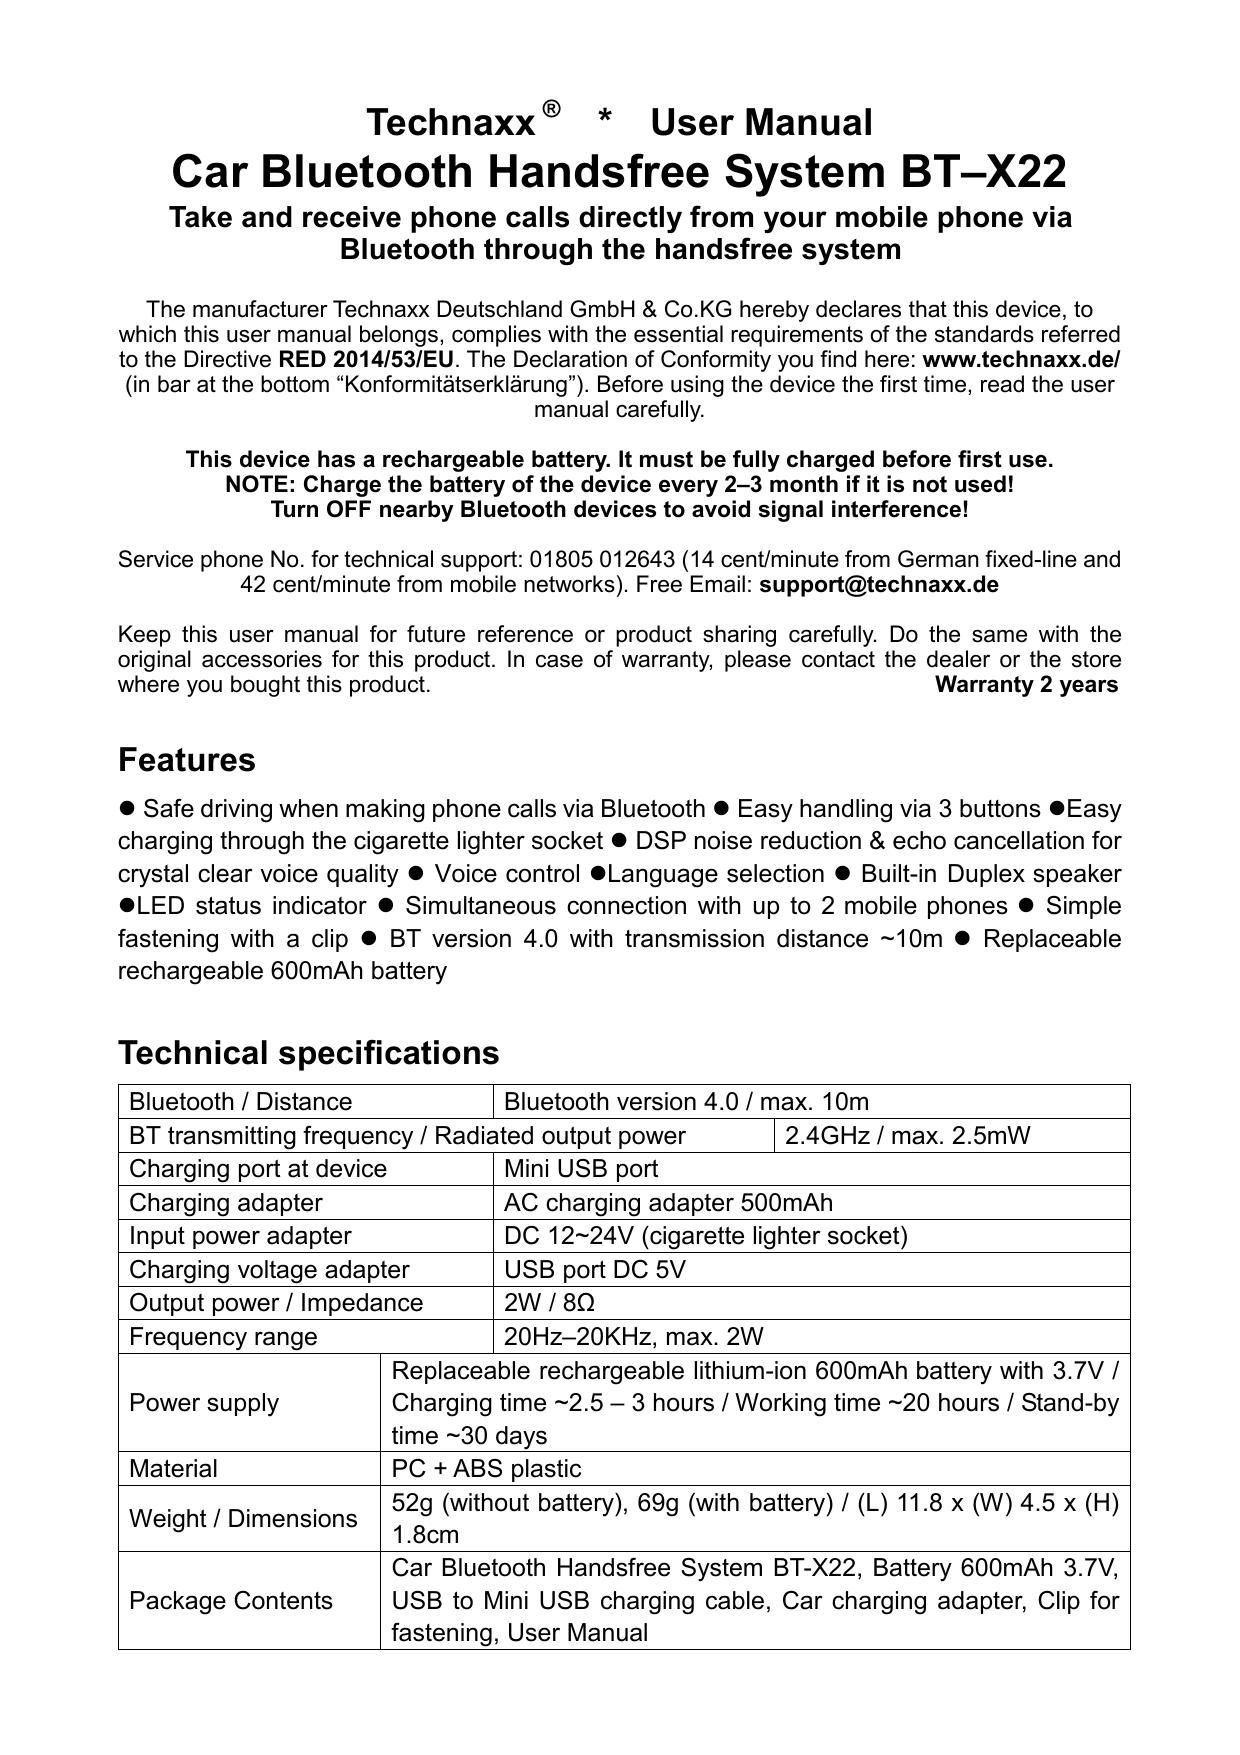 Technaxx BT-X22 Car Bluetooth Handsfree System Owner\'s Manual | Manualzz